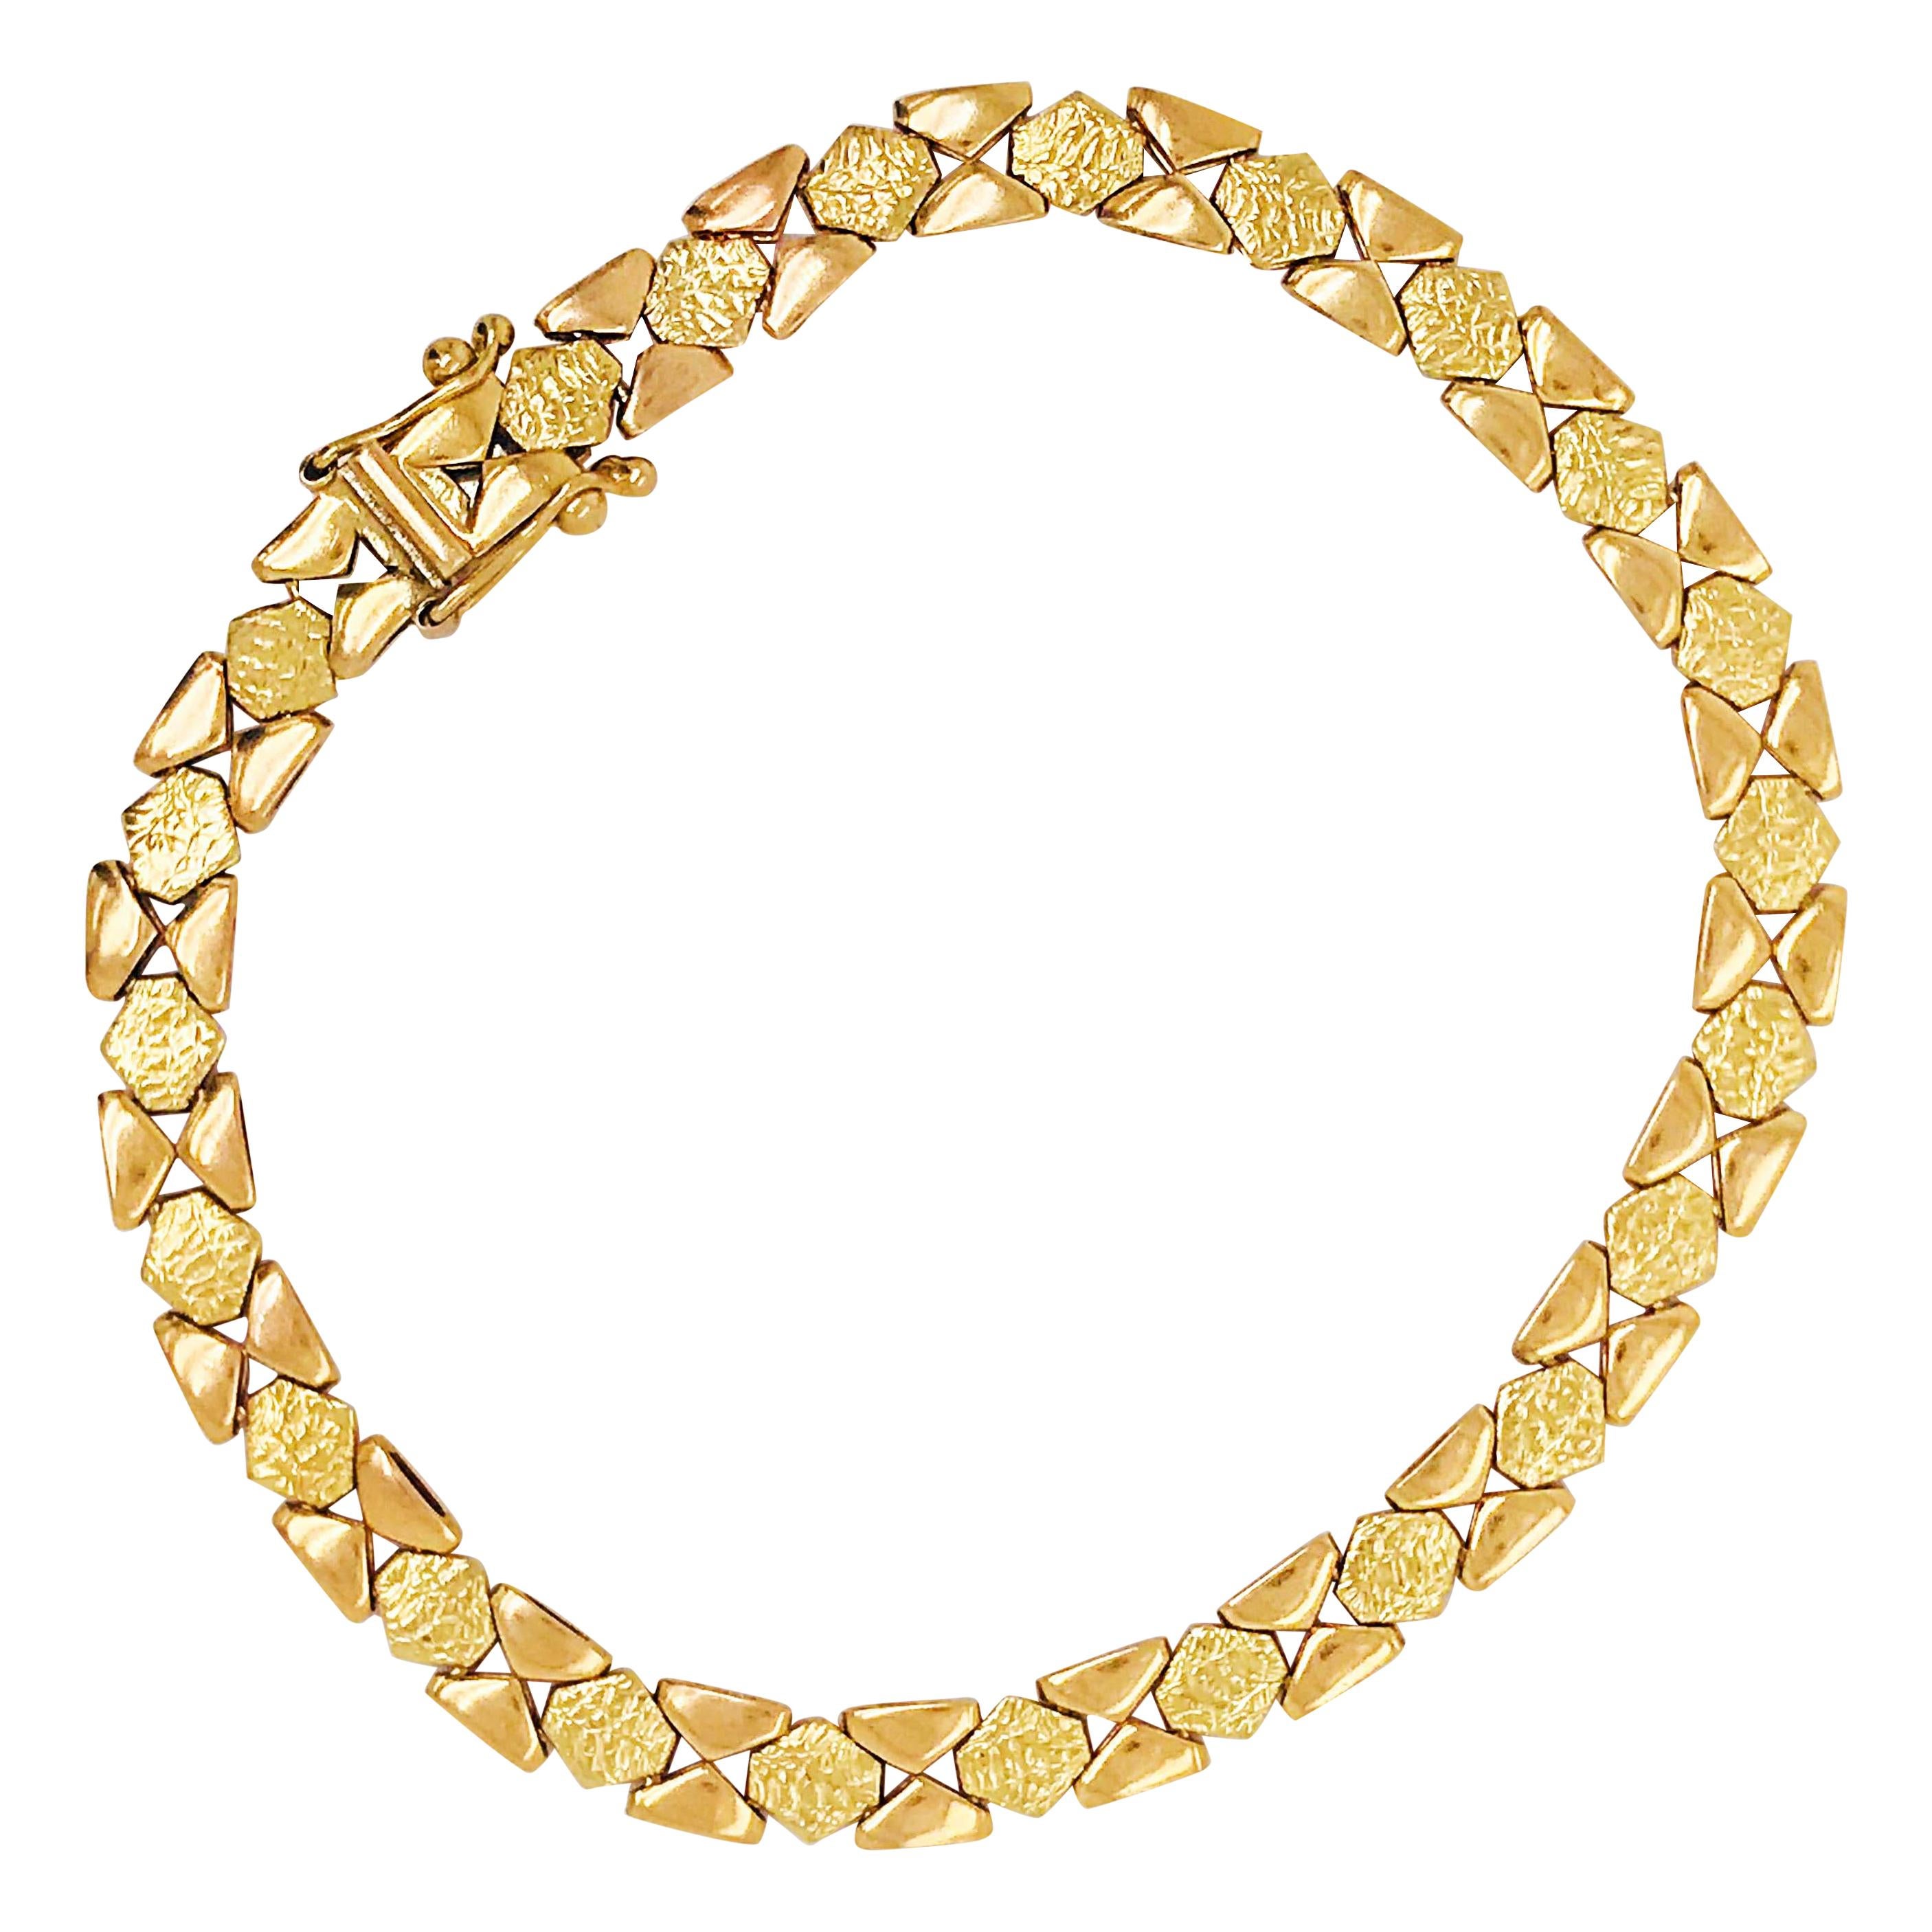 Custom Gold Textured Chain Bracelet, 14 Karat Gold Diamond Shaped Wide Chain